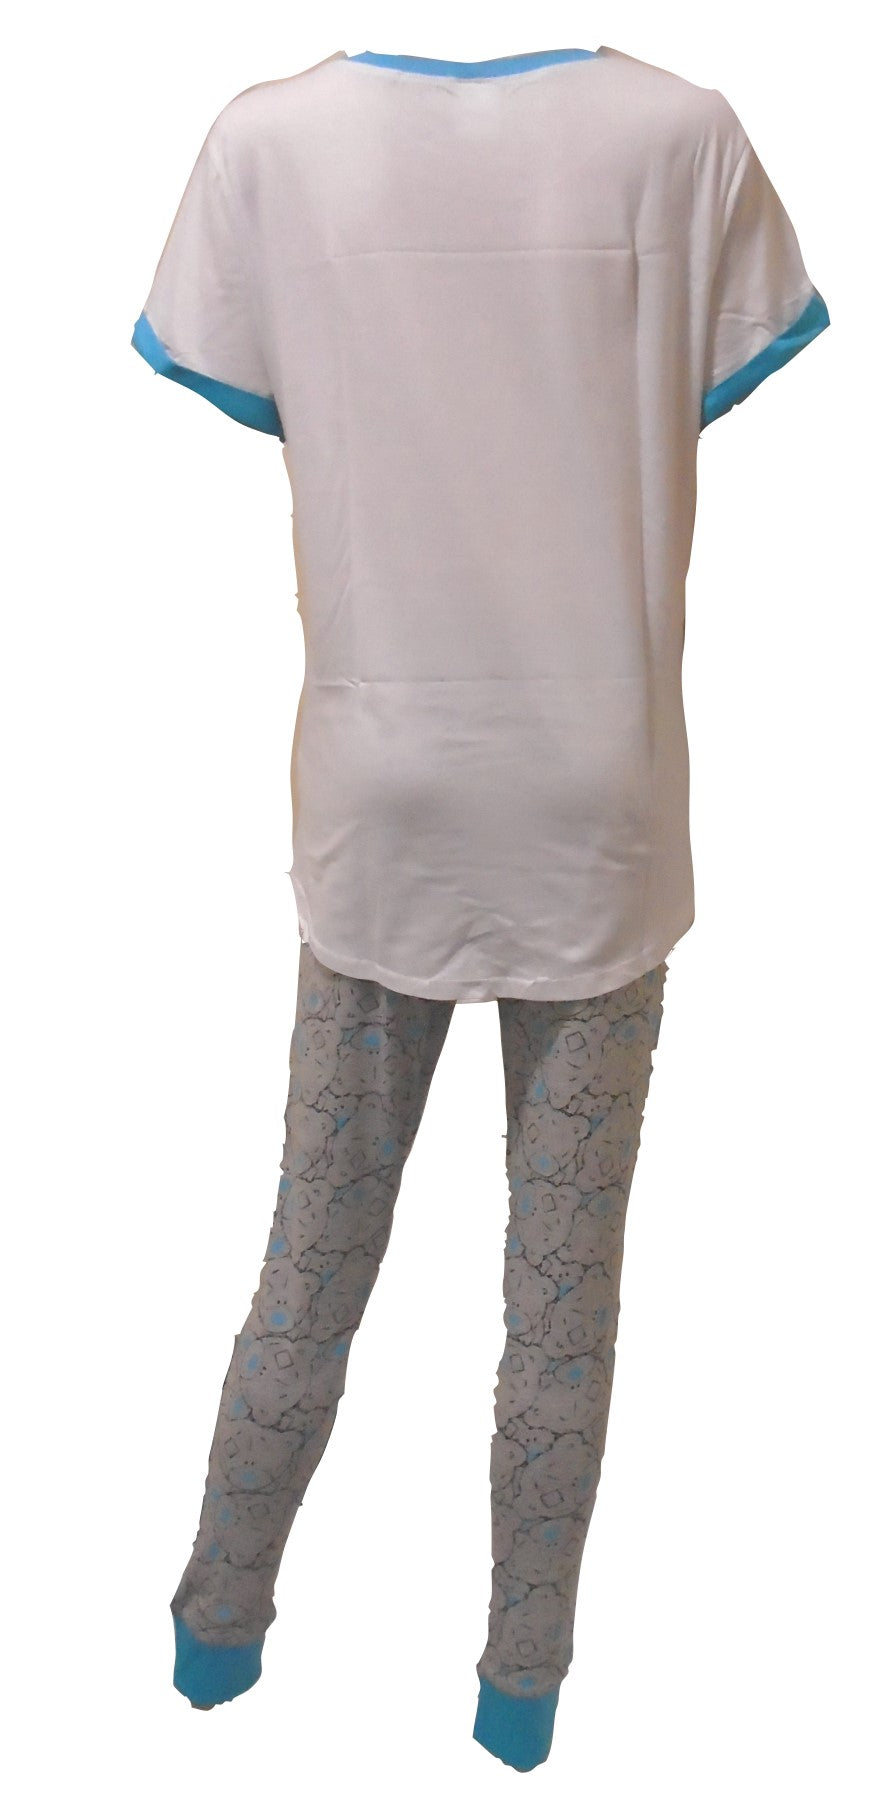 Ladies Tatty Teddy "LOVE" Pyjamas Size 8-10 Great Gift Idea